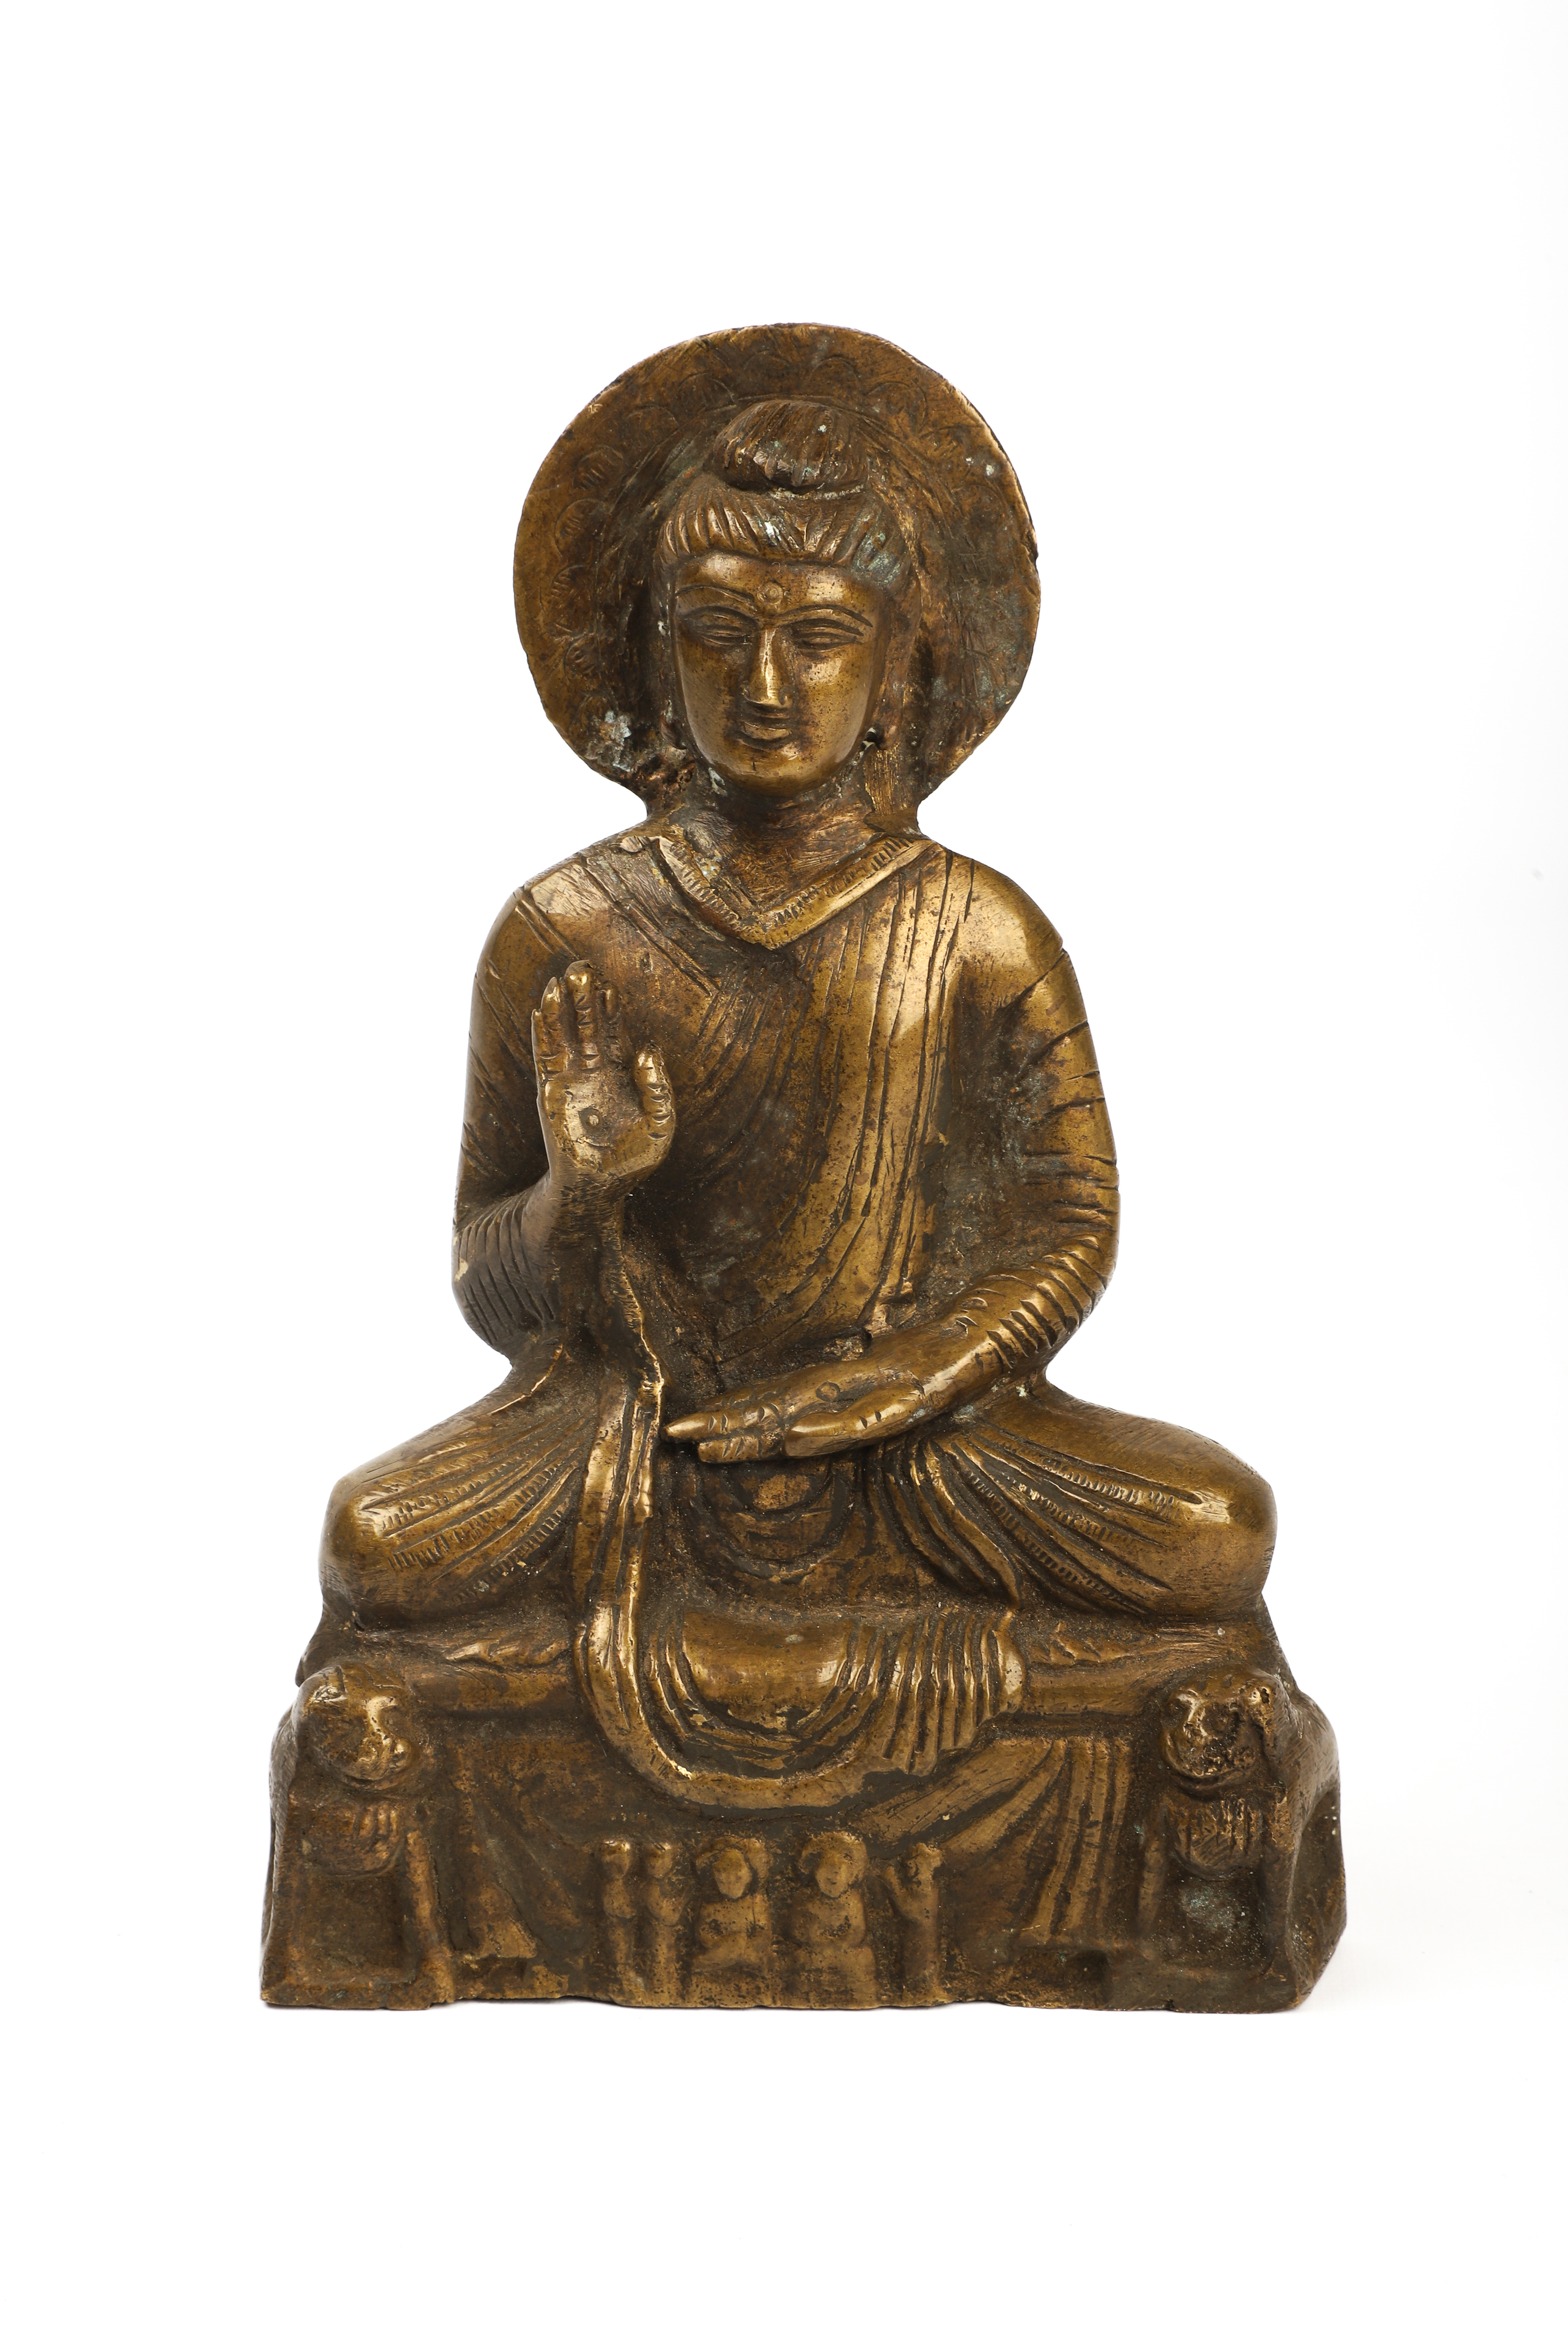 Indian cast bronze Buddha figure,